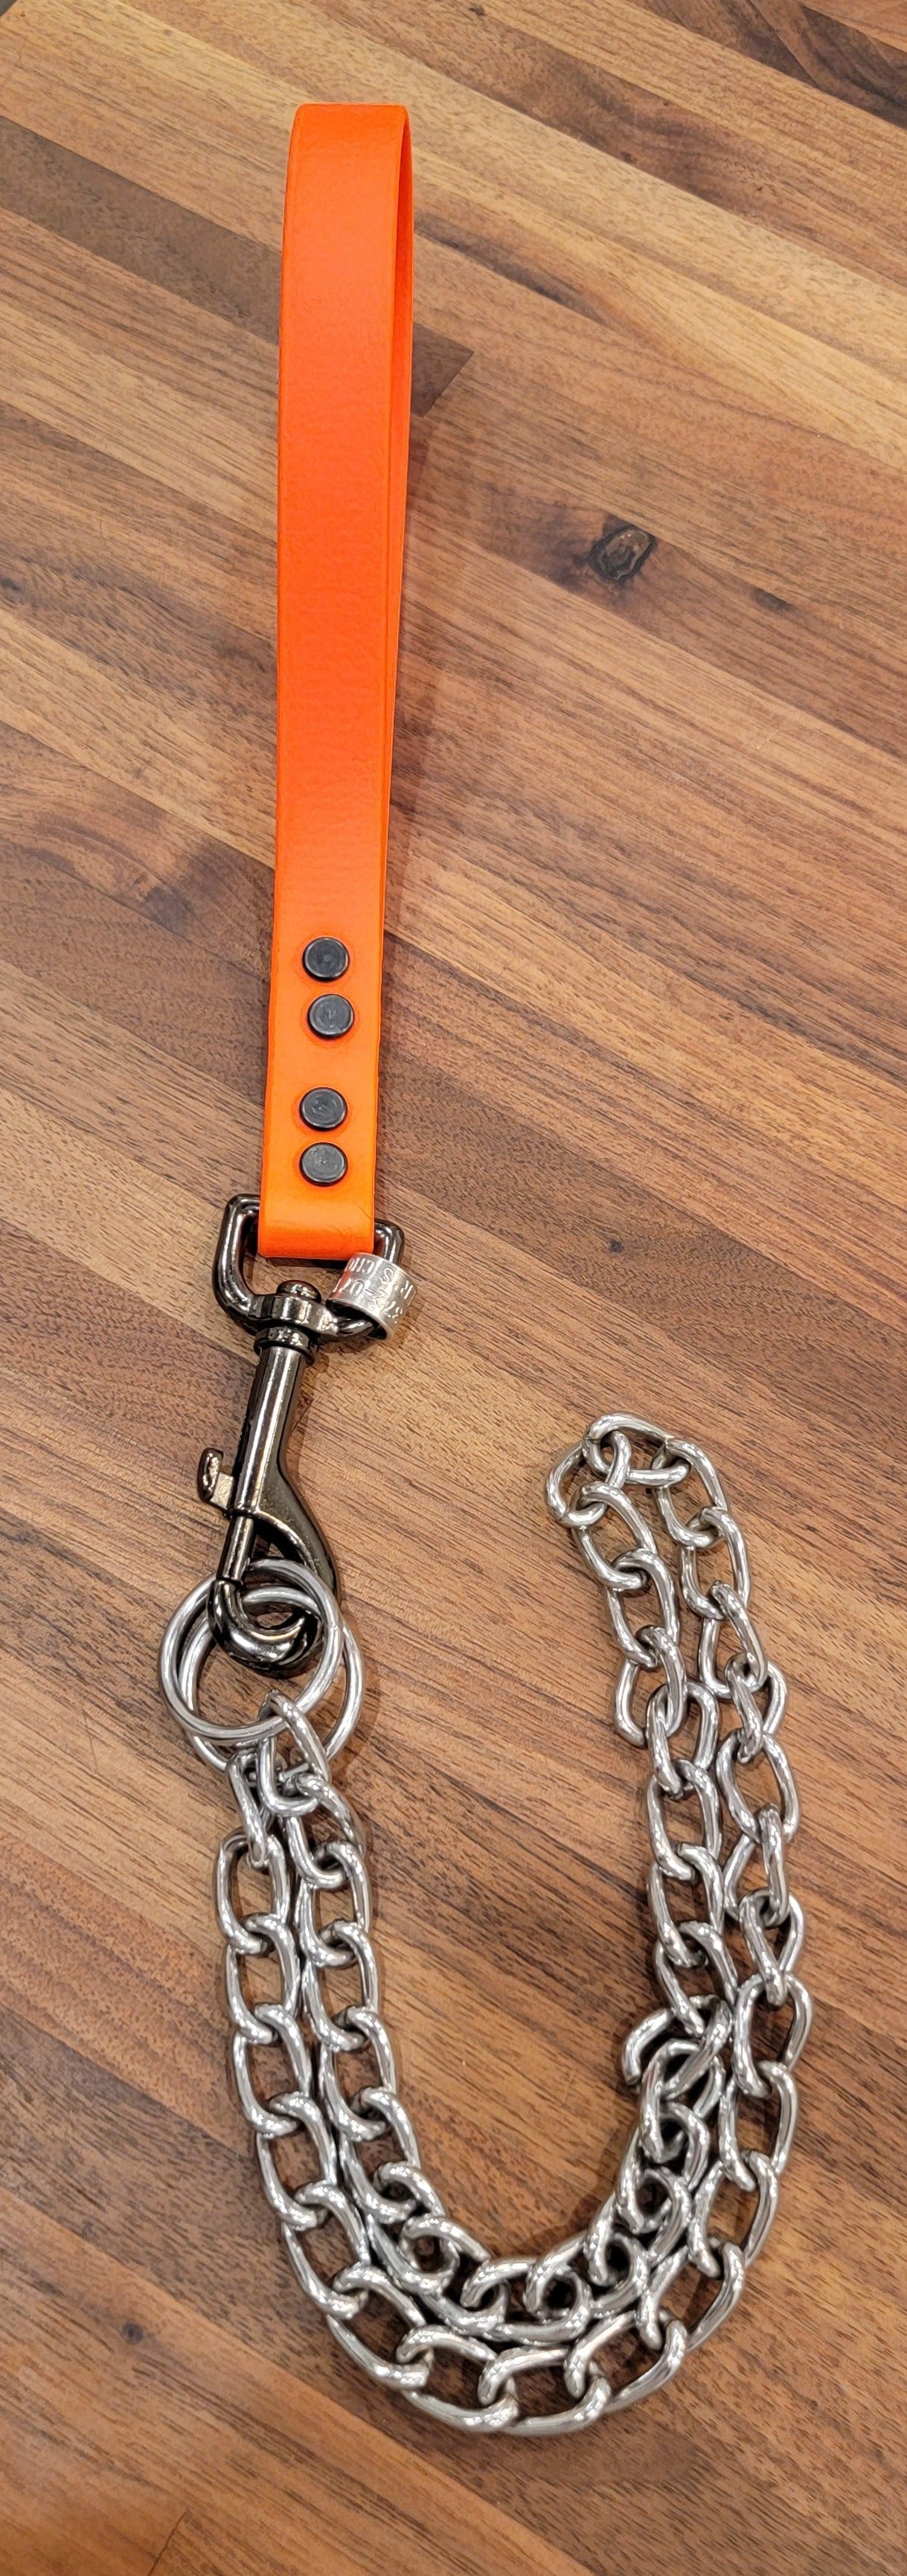 Chain Slip Lead